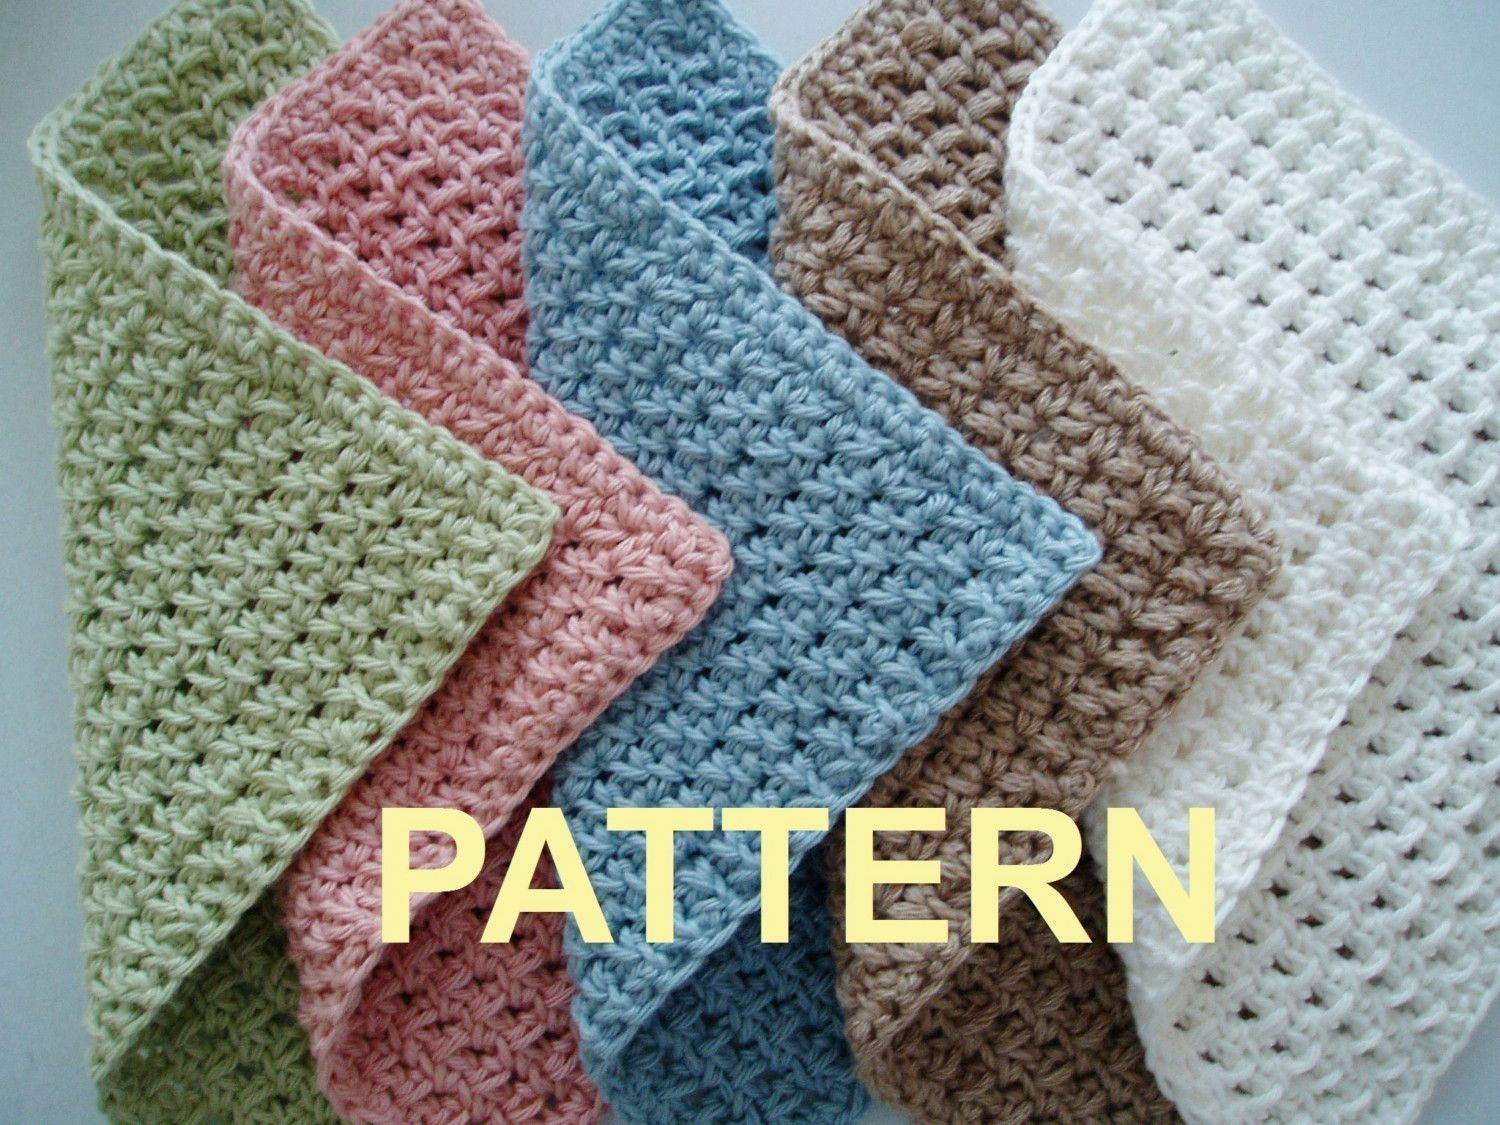 Crochet Dishcloth Free Pattern Very Easy Crochet Dishcloth Patterns Crochet Washcloth Patterns